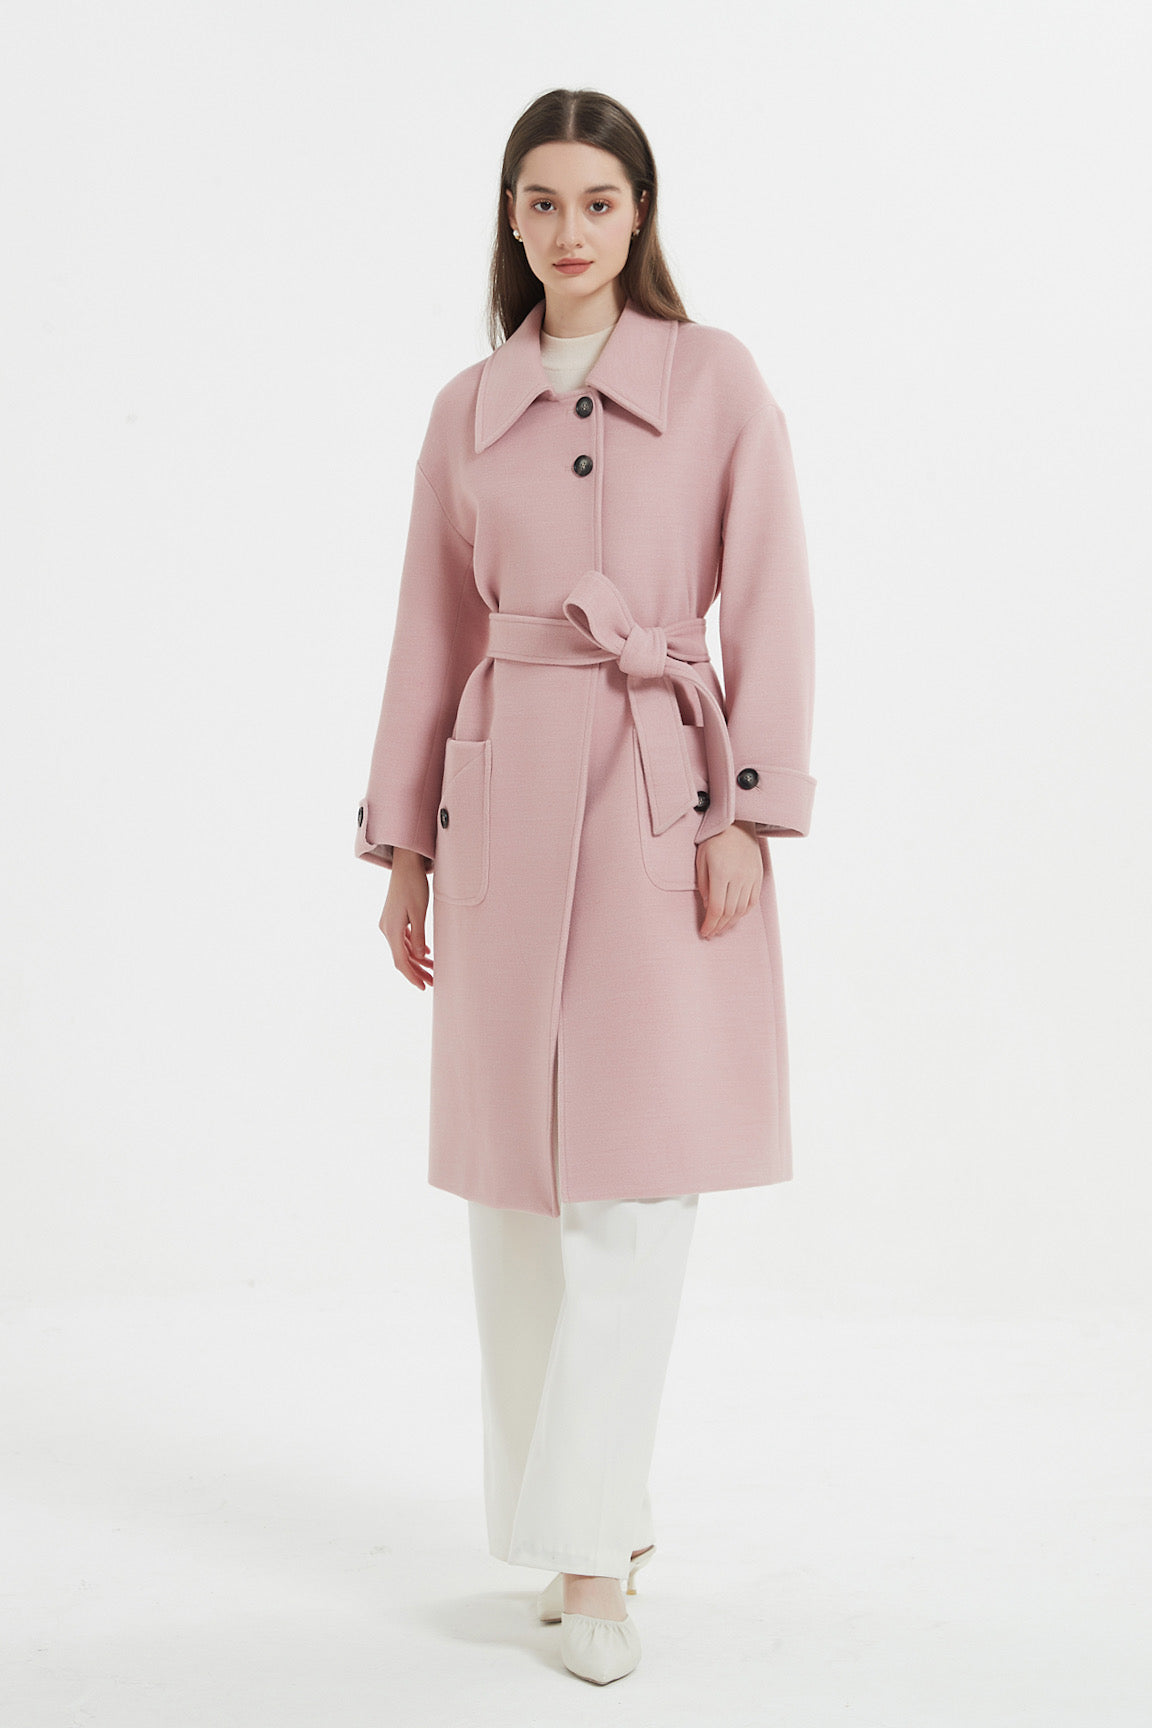 SKYE Shop Chic Modern Elegant Timeless Women Clothing French Parisian Minimalist Annabelle Long Wool Coat Pink 4